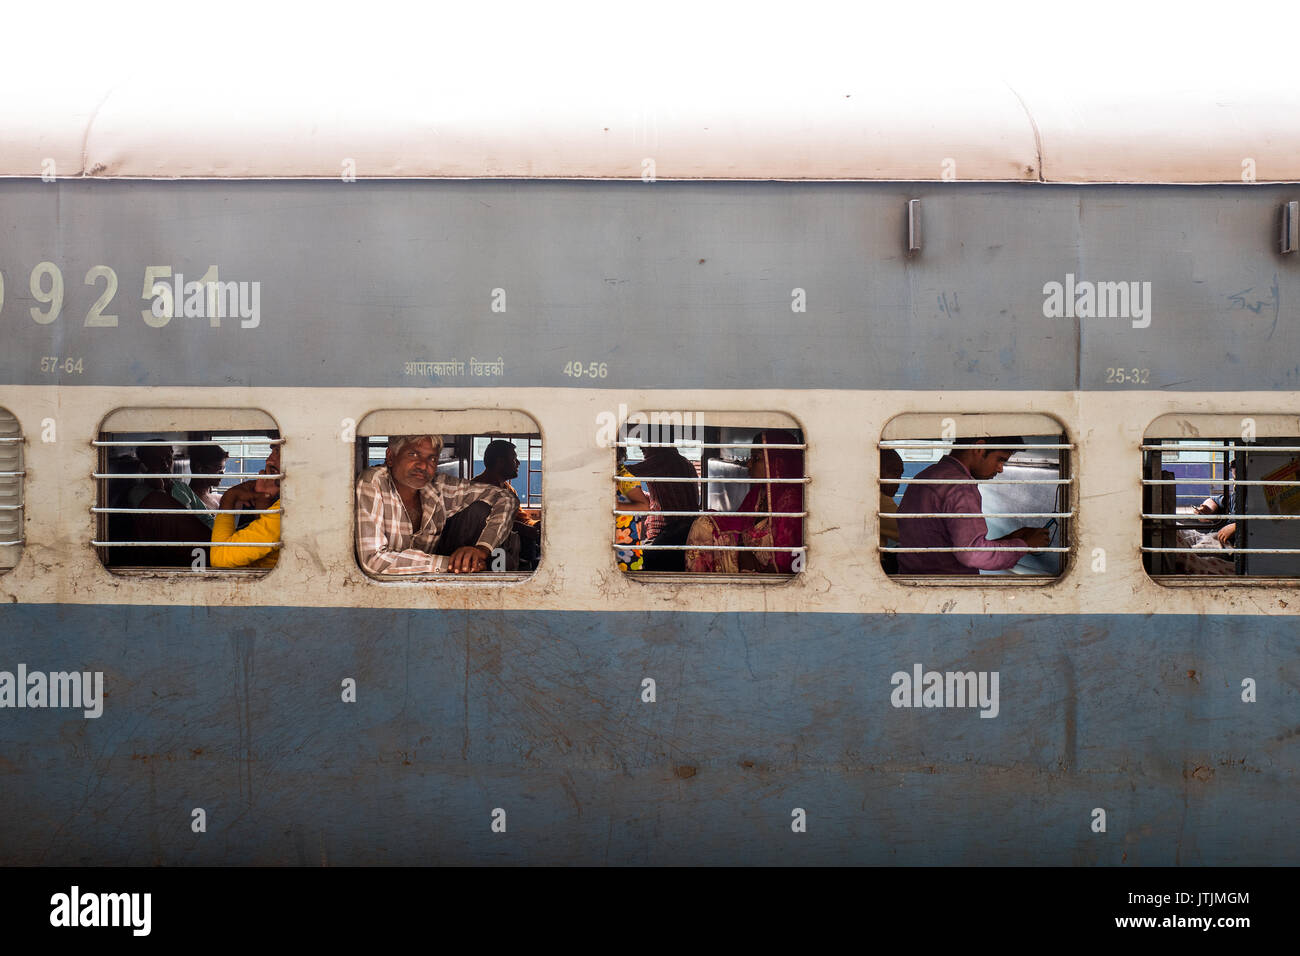 Indian Railways carriage, Rajasthan, India Stock Photo